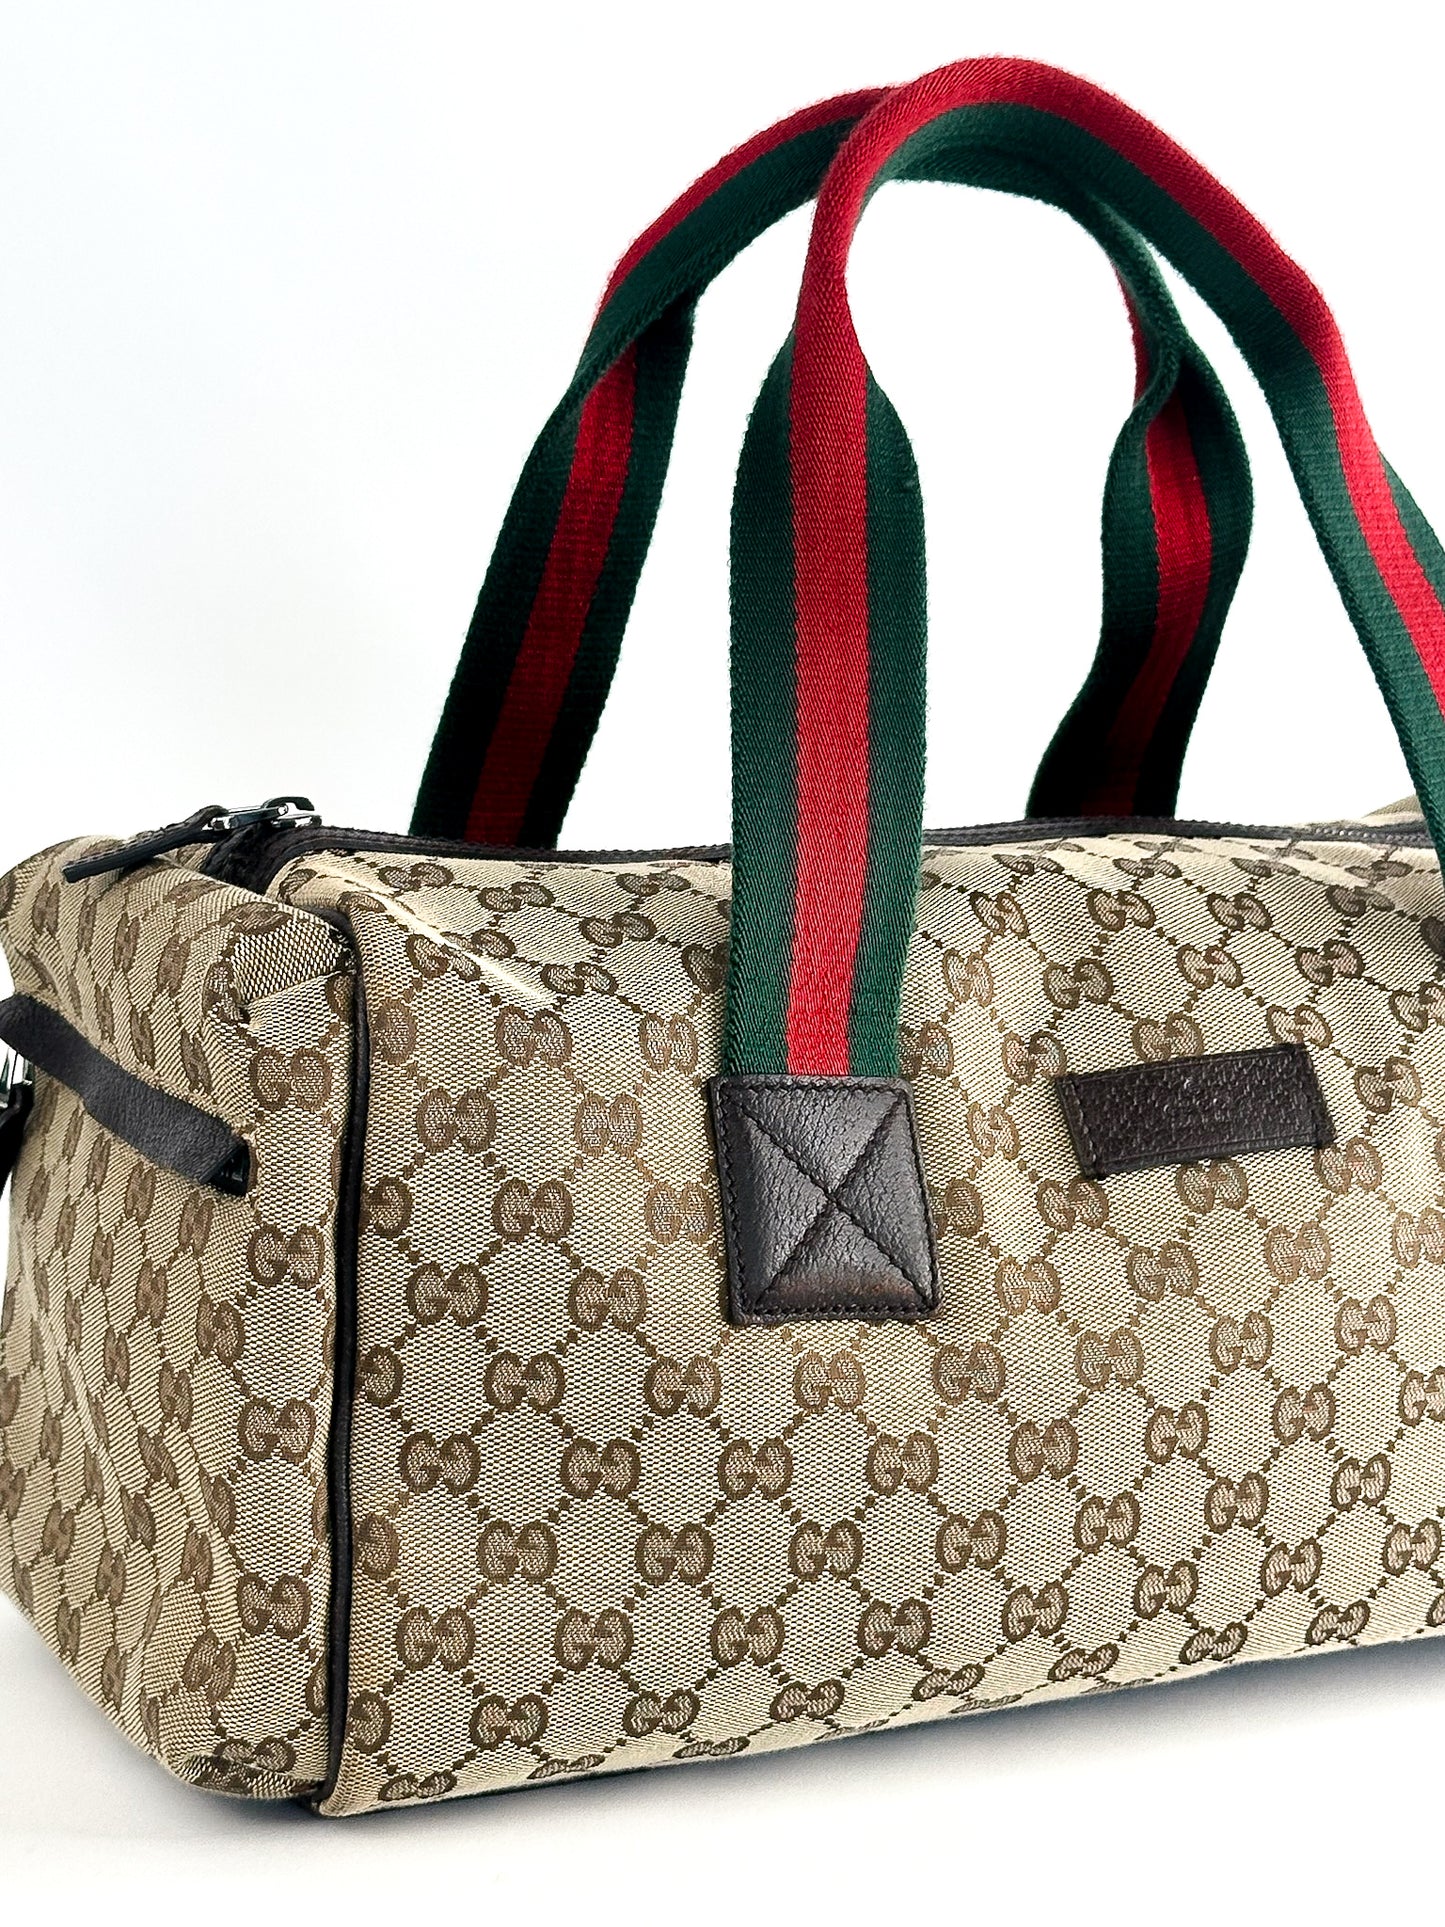 Gucci Monogram GG Duffle Bag